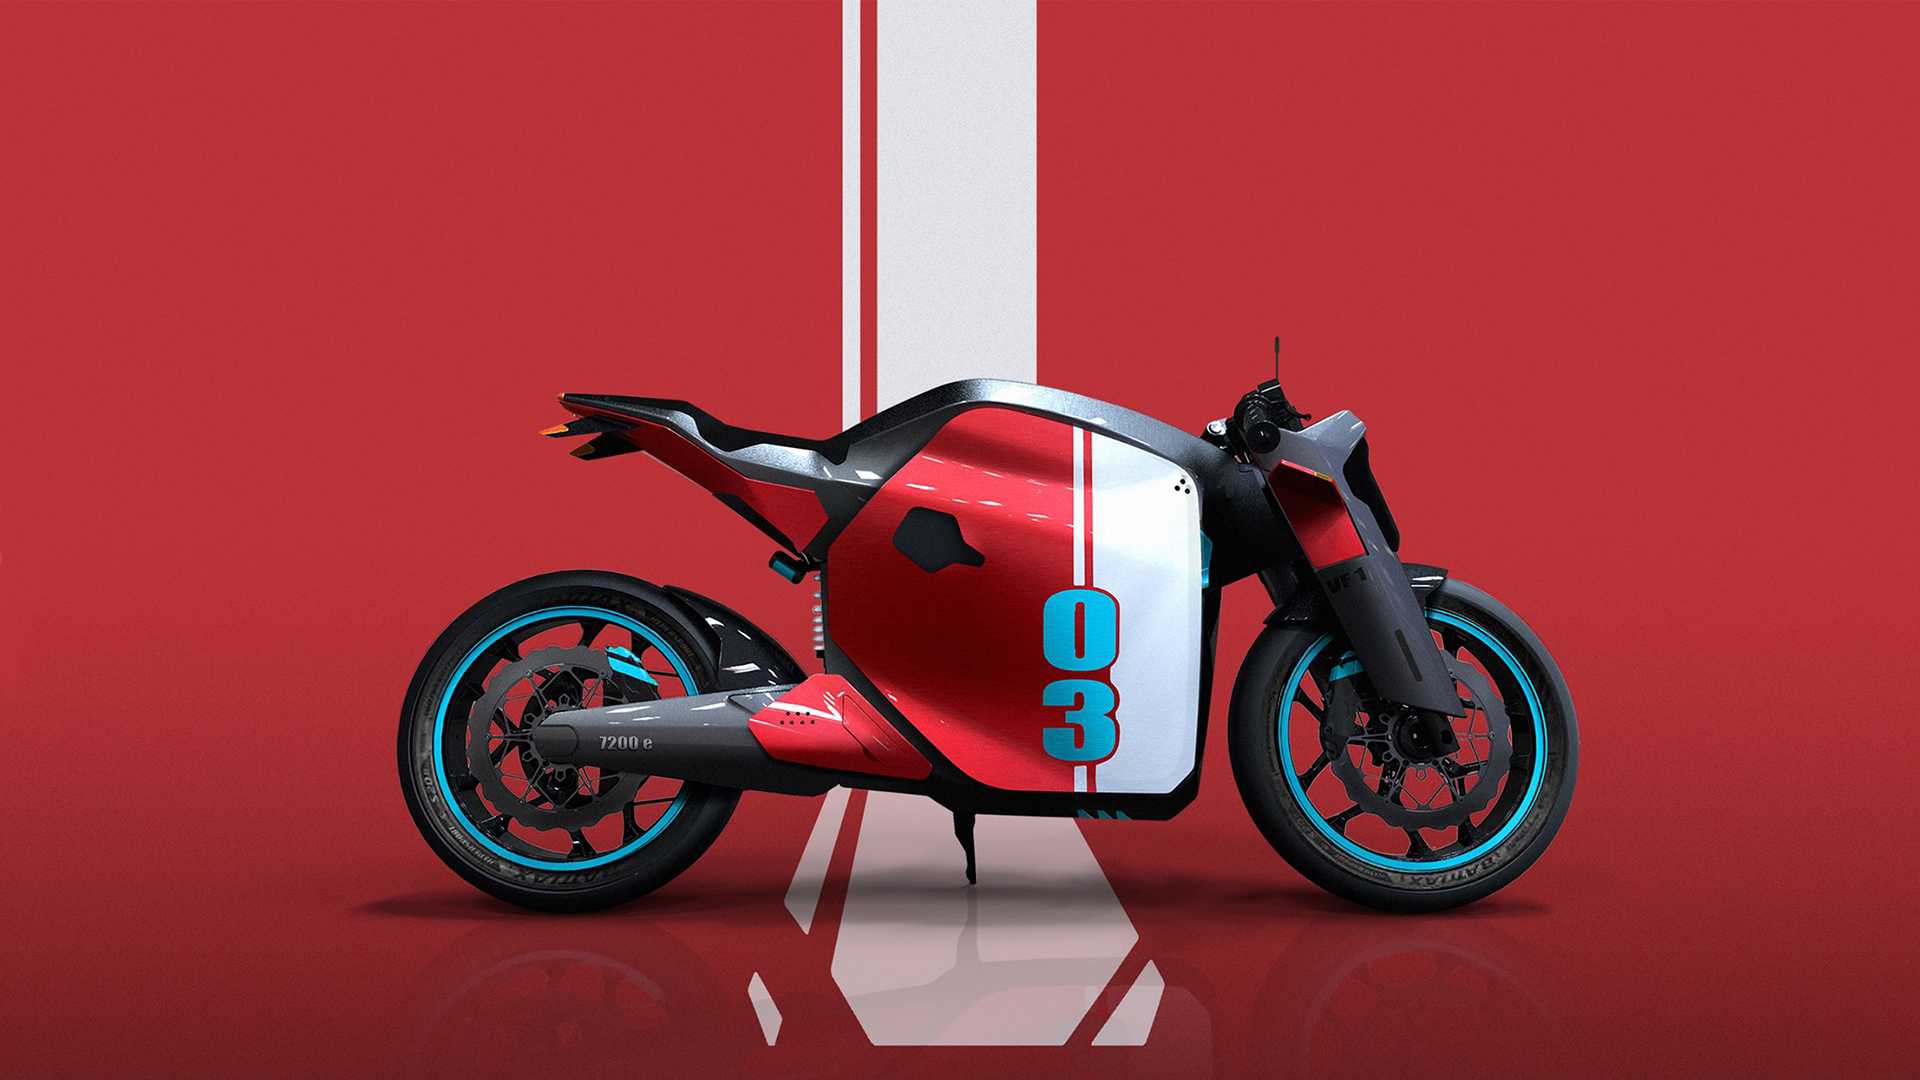 Ultraviolette To Unveil F77 Electric Superbike In November